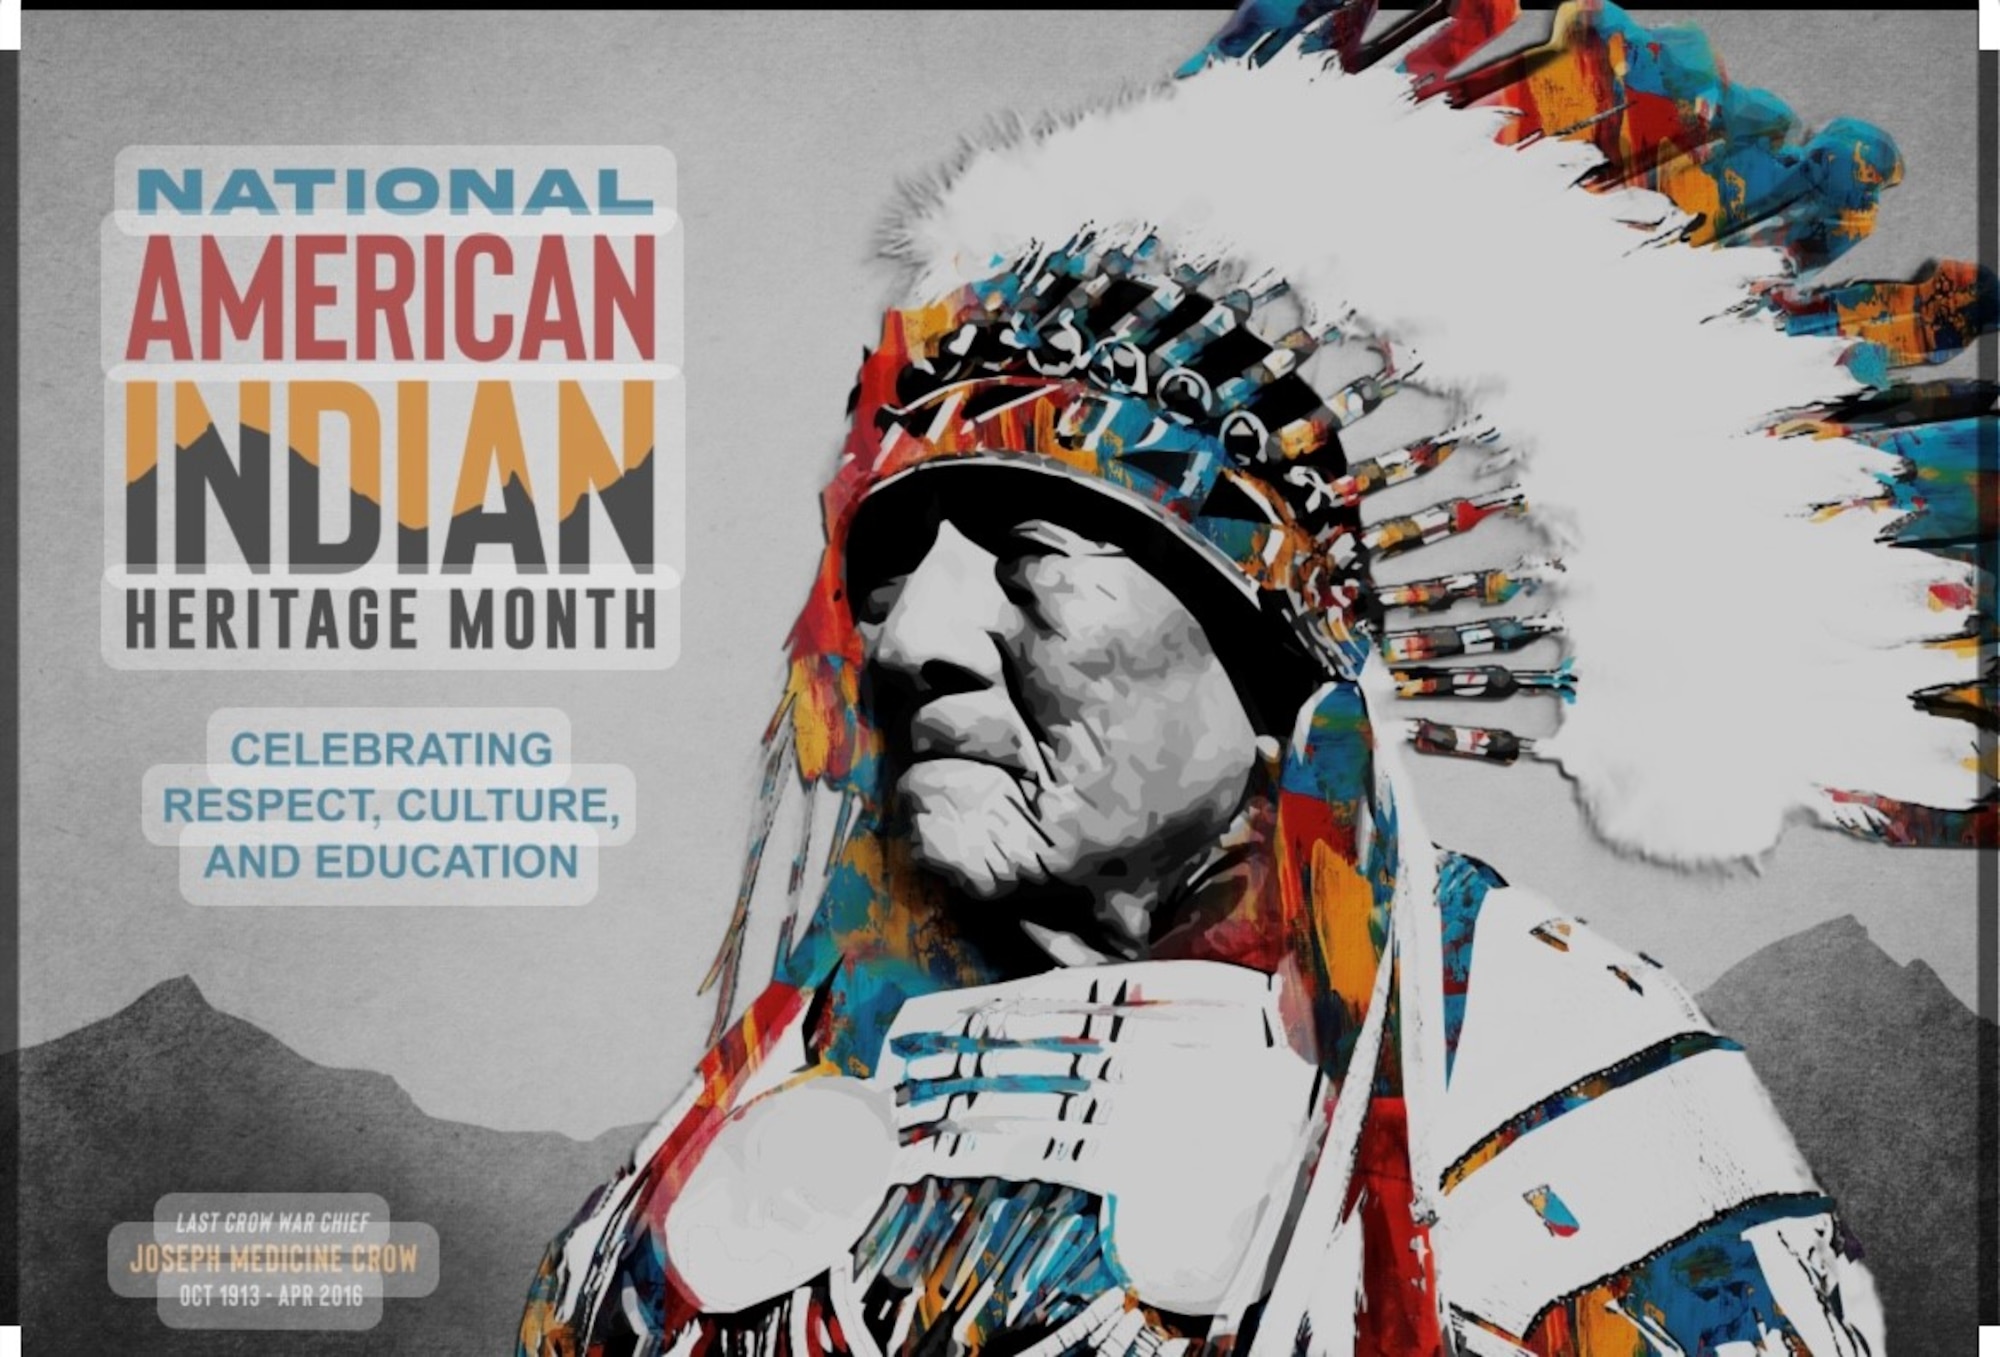 A Native American chief in full headdress